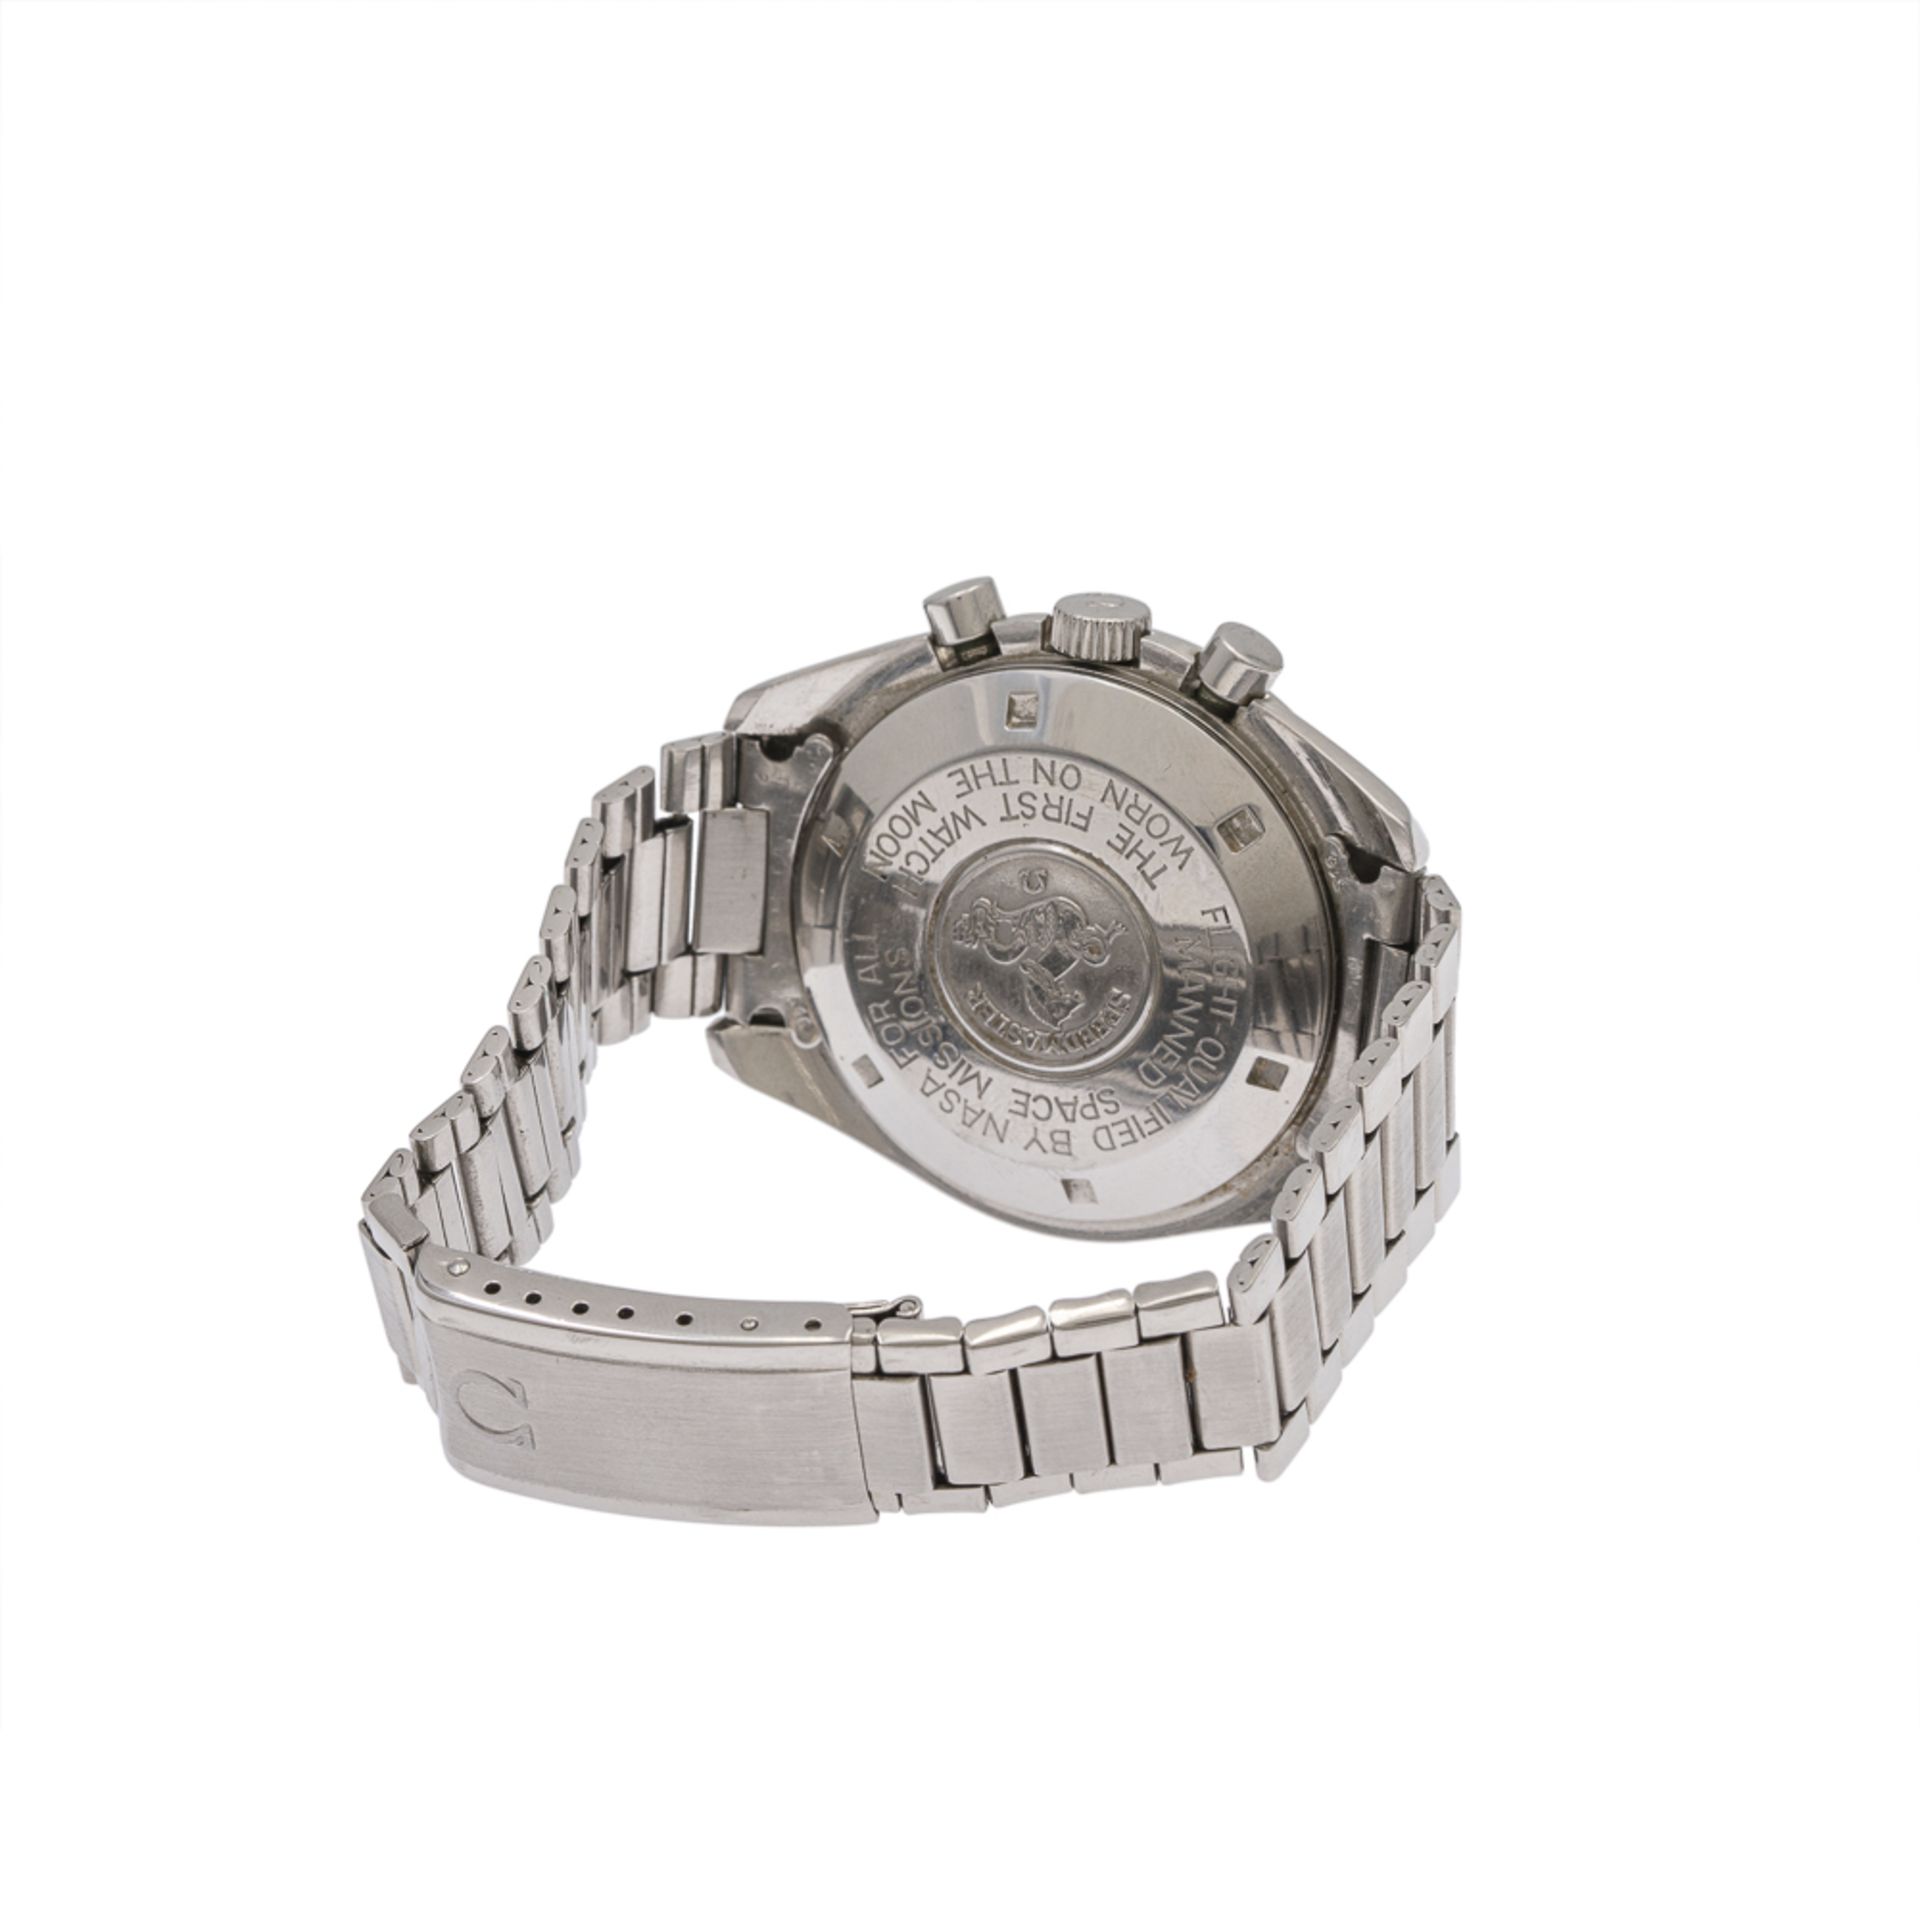 Omega Speedmaster Moonwatch Professional vintage wristwatch - Image 2 of 3